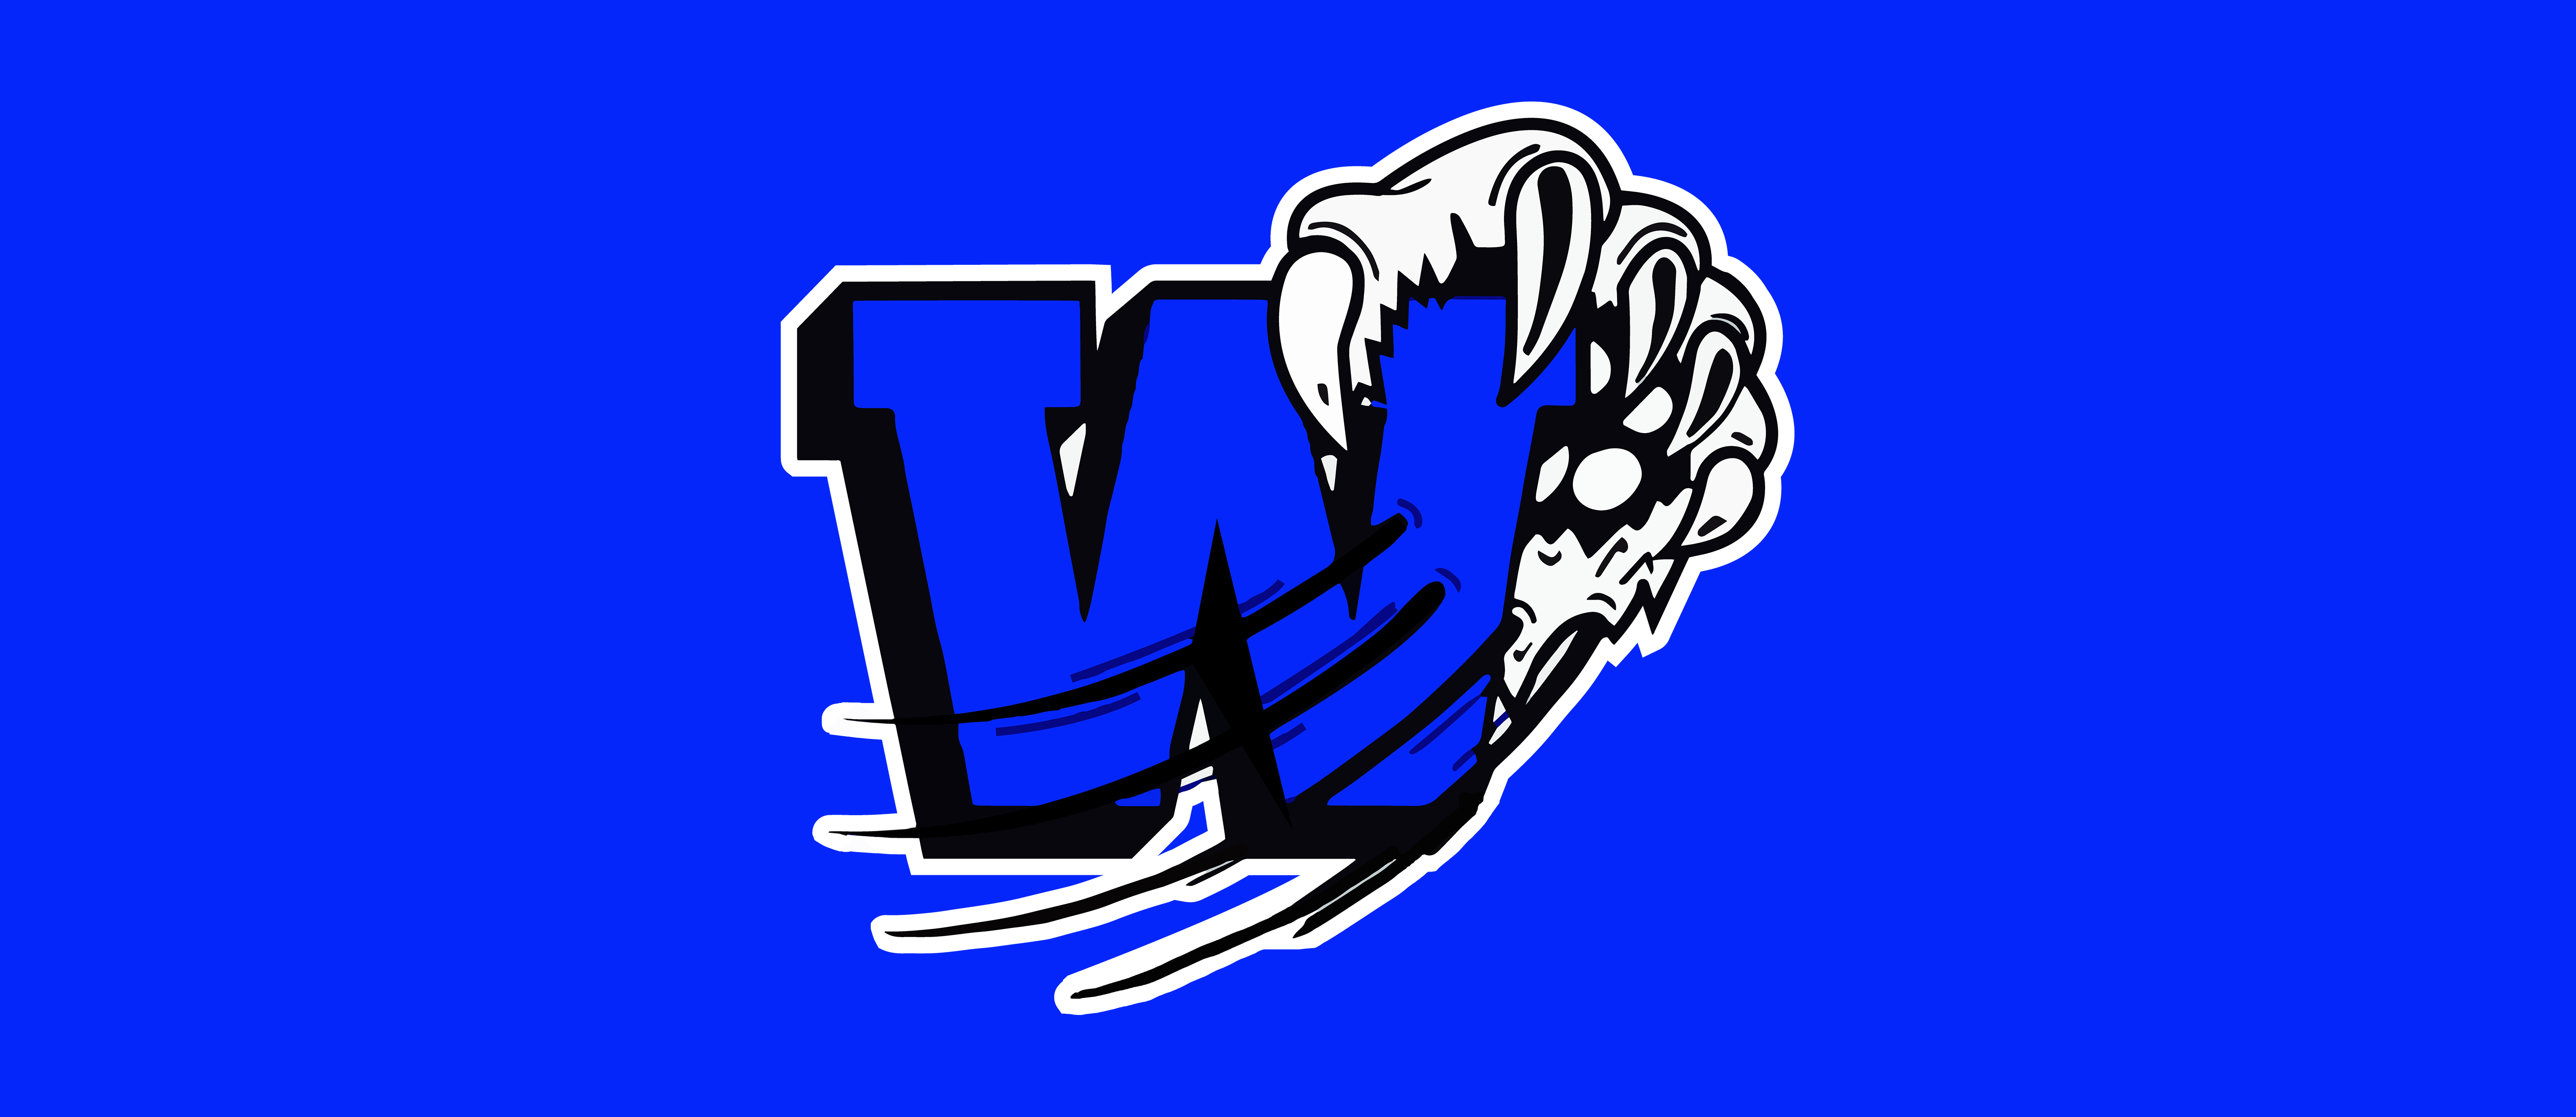 Logo - blue W with wolverine claw shredding corner of letter